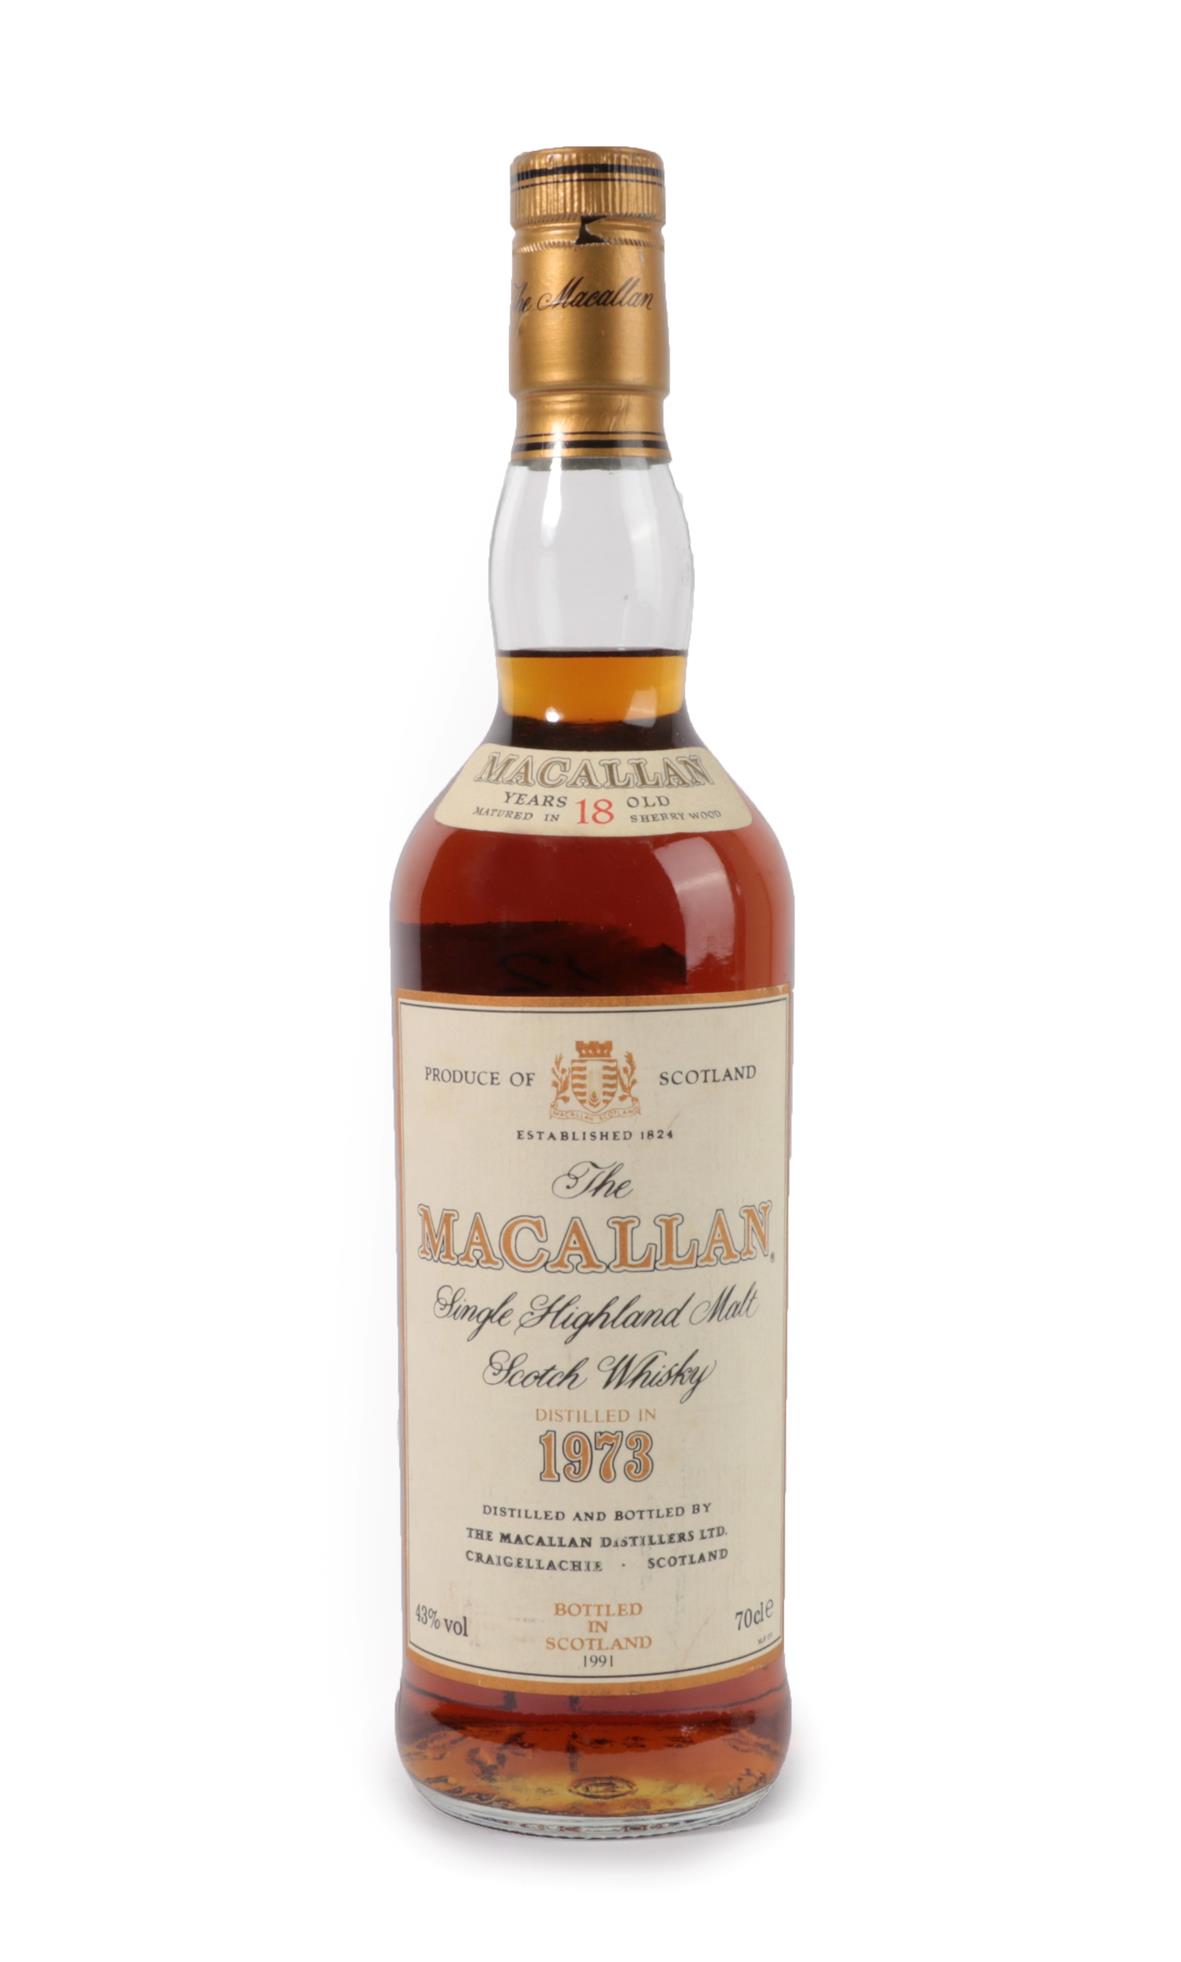 The Macallan Single Highland Malt Scotch Whisky 18 Years Old, distilled 1973, bottled 1991, 43%,